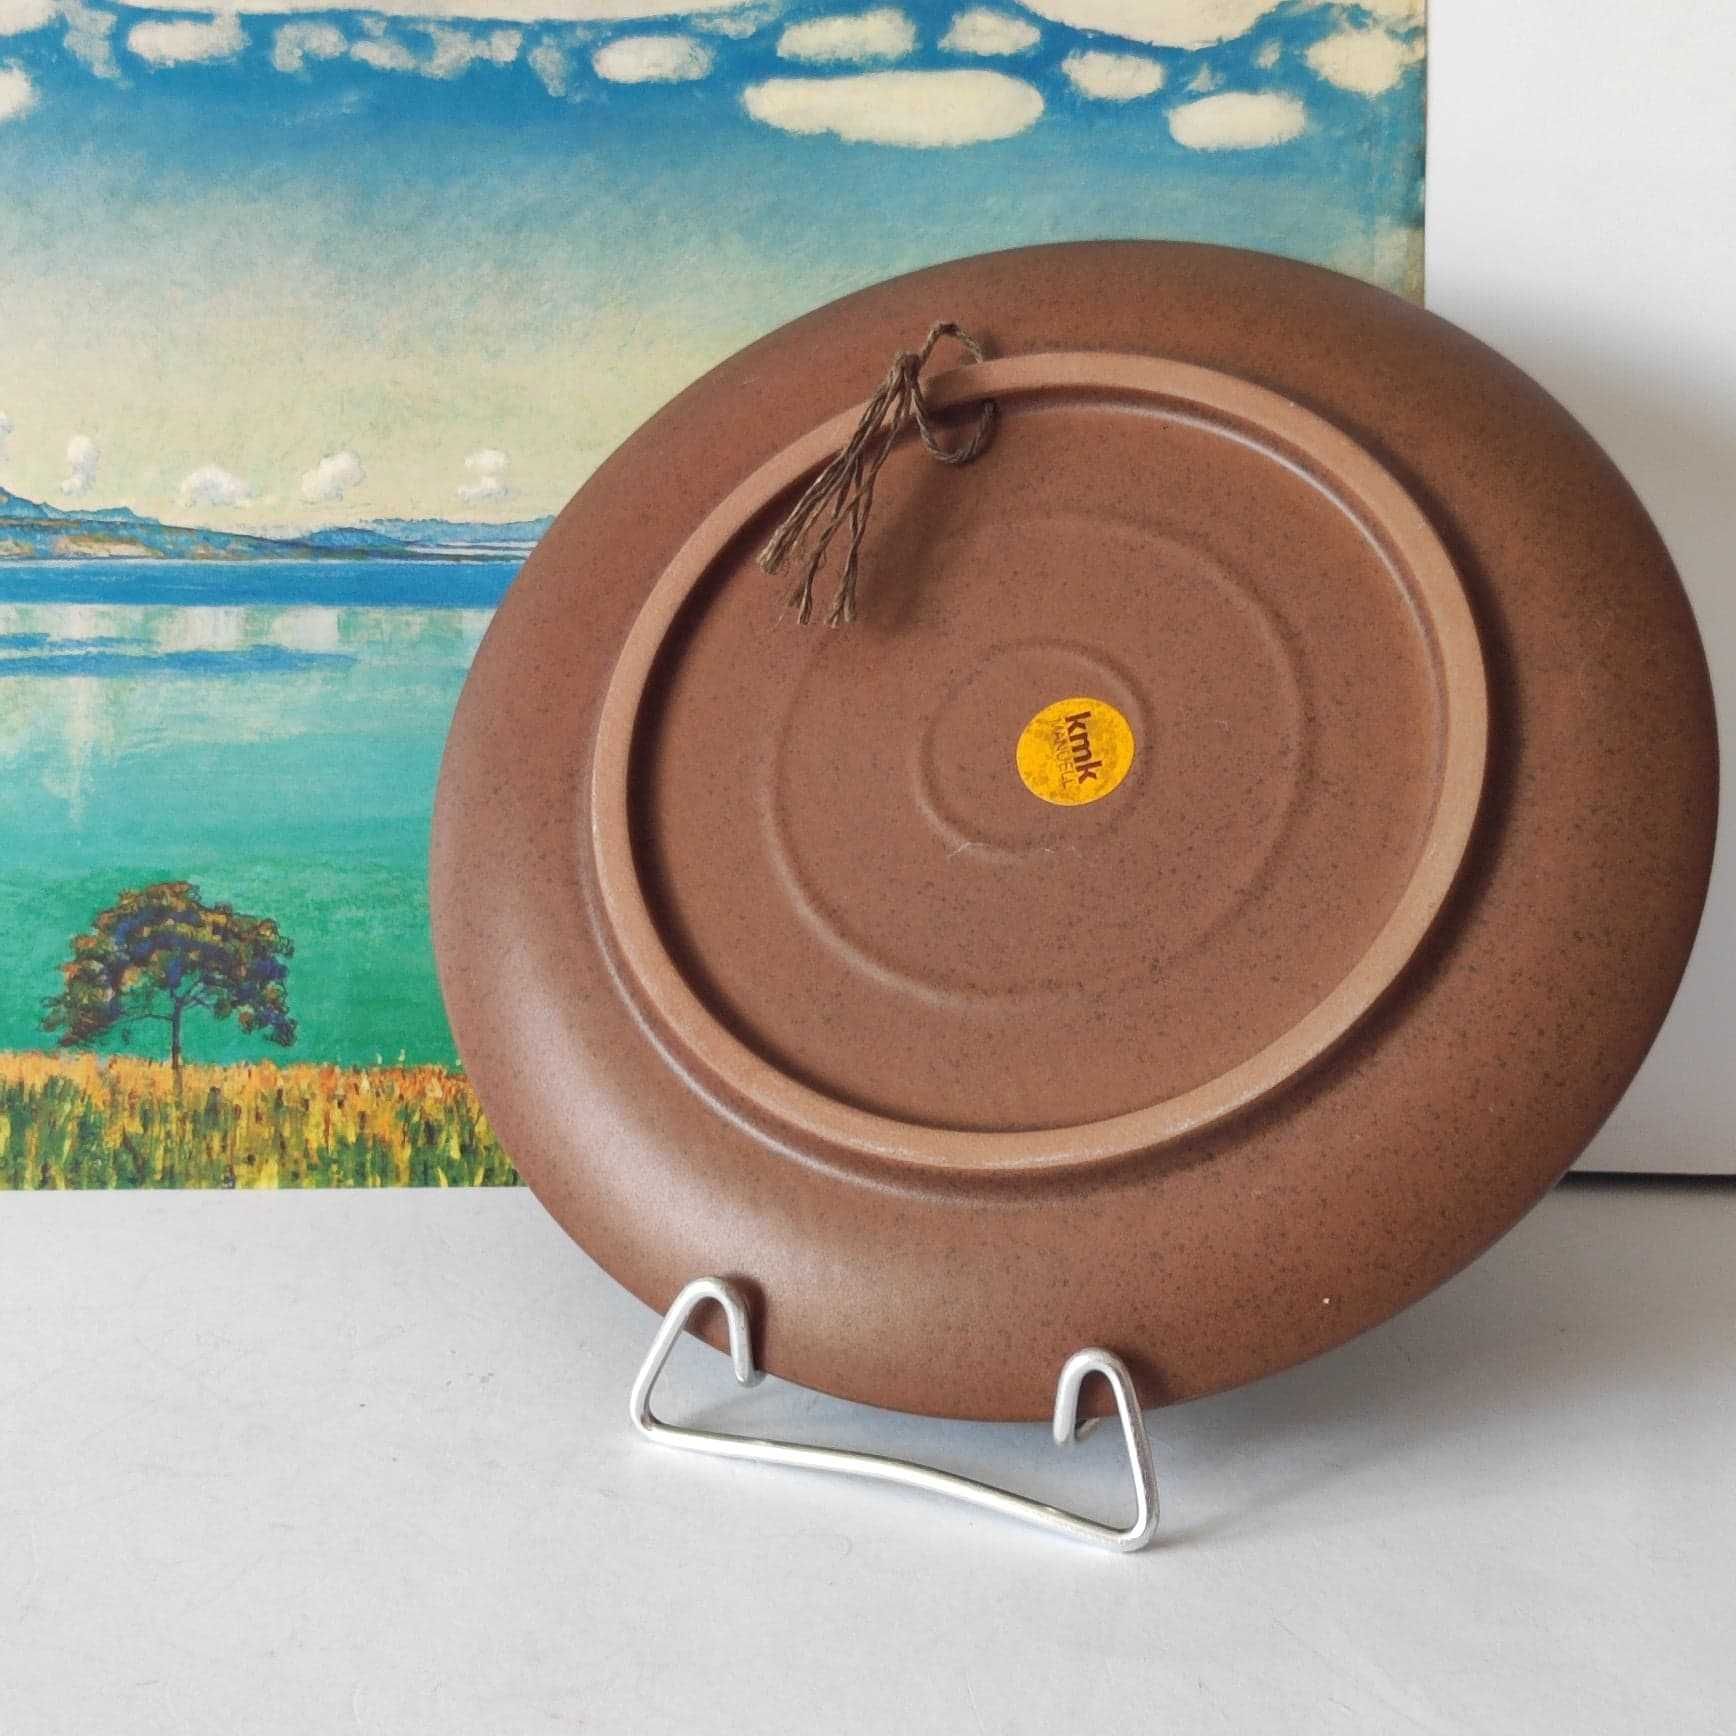 Stare ceramiczne talerze zestaw Kmk Manuell WGP Design Vinatge